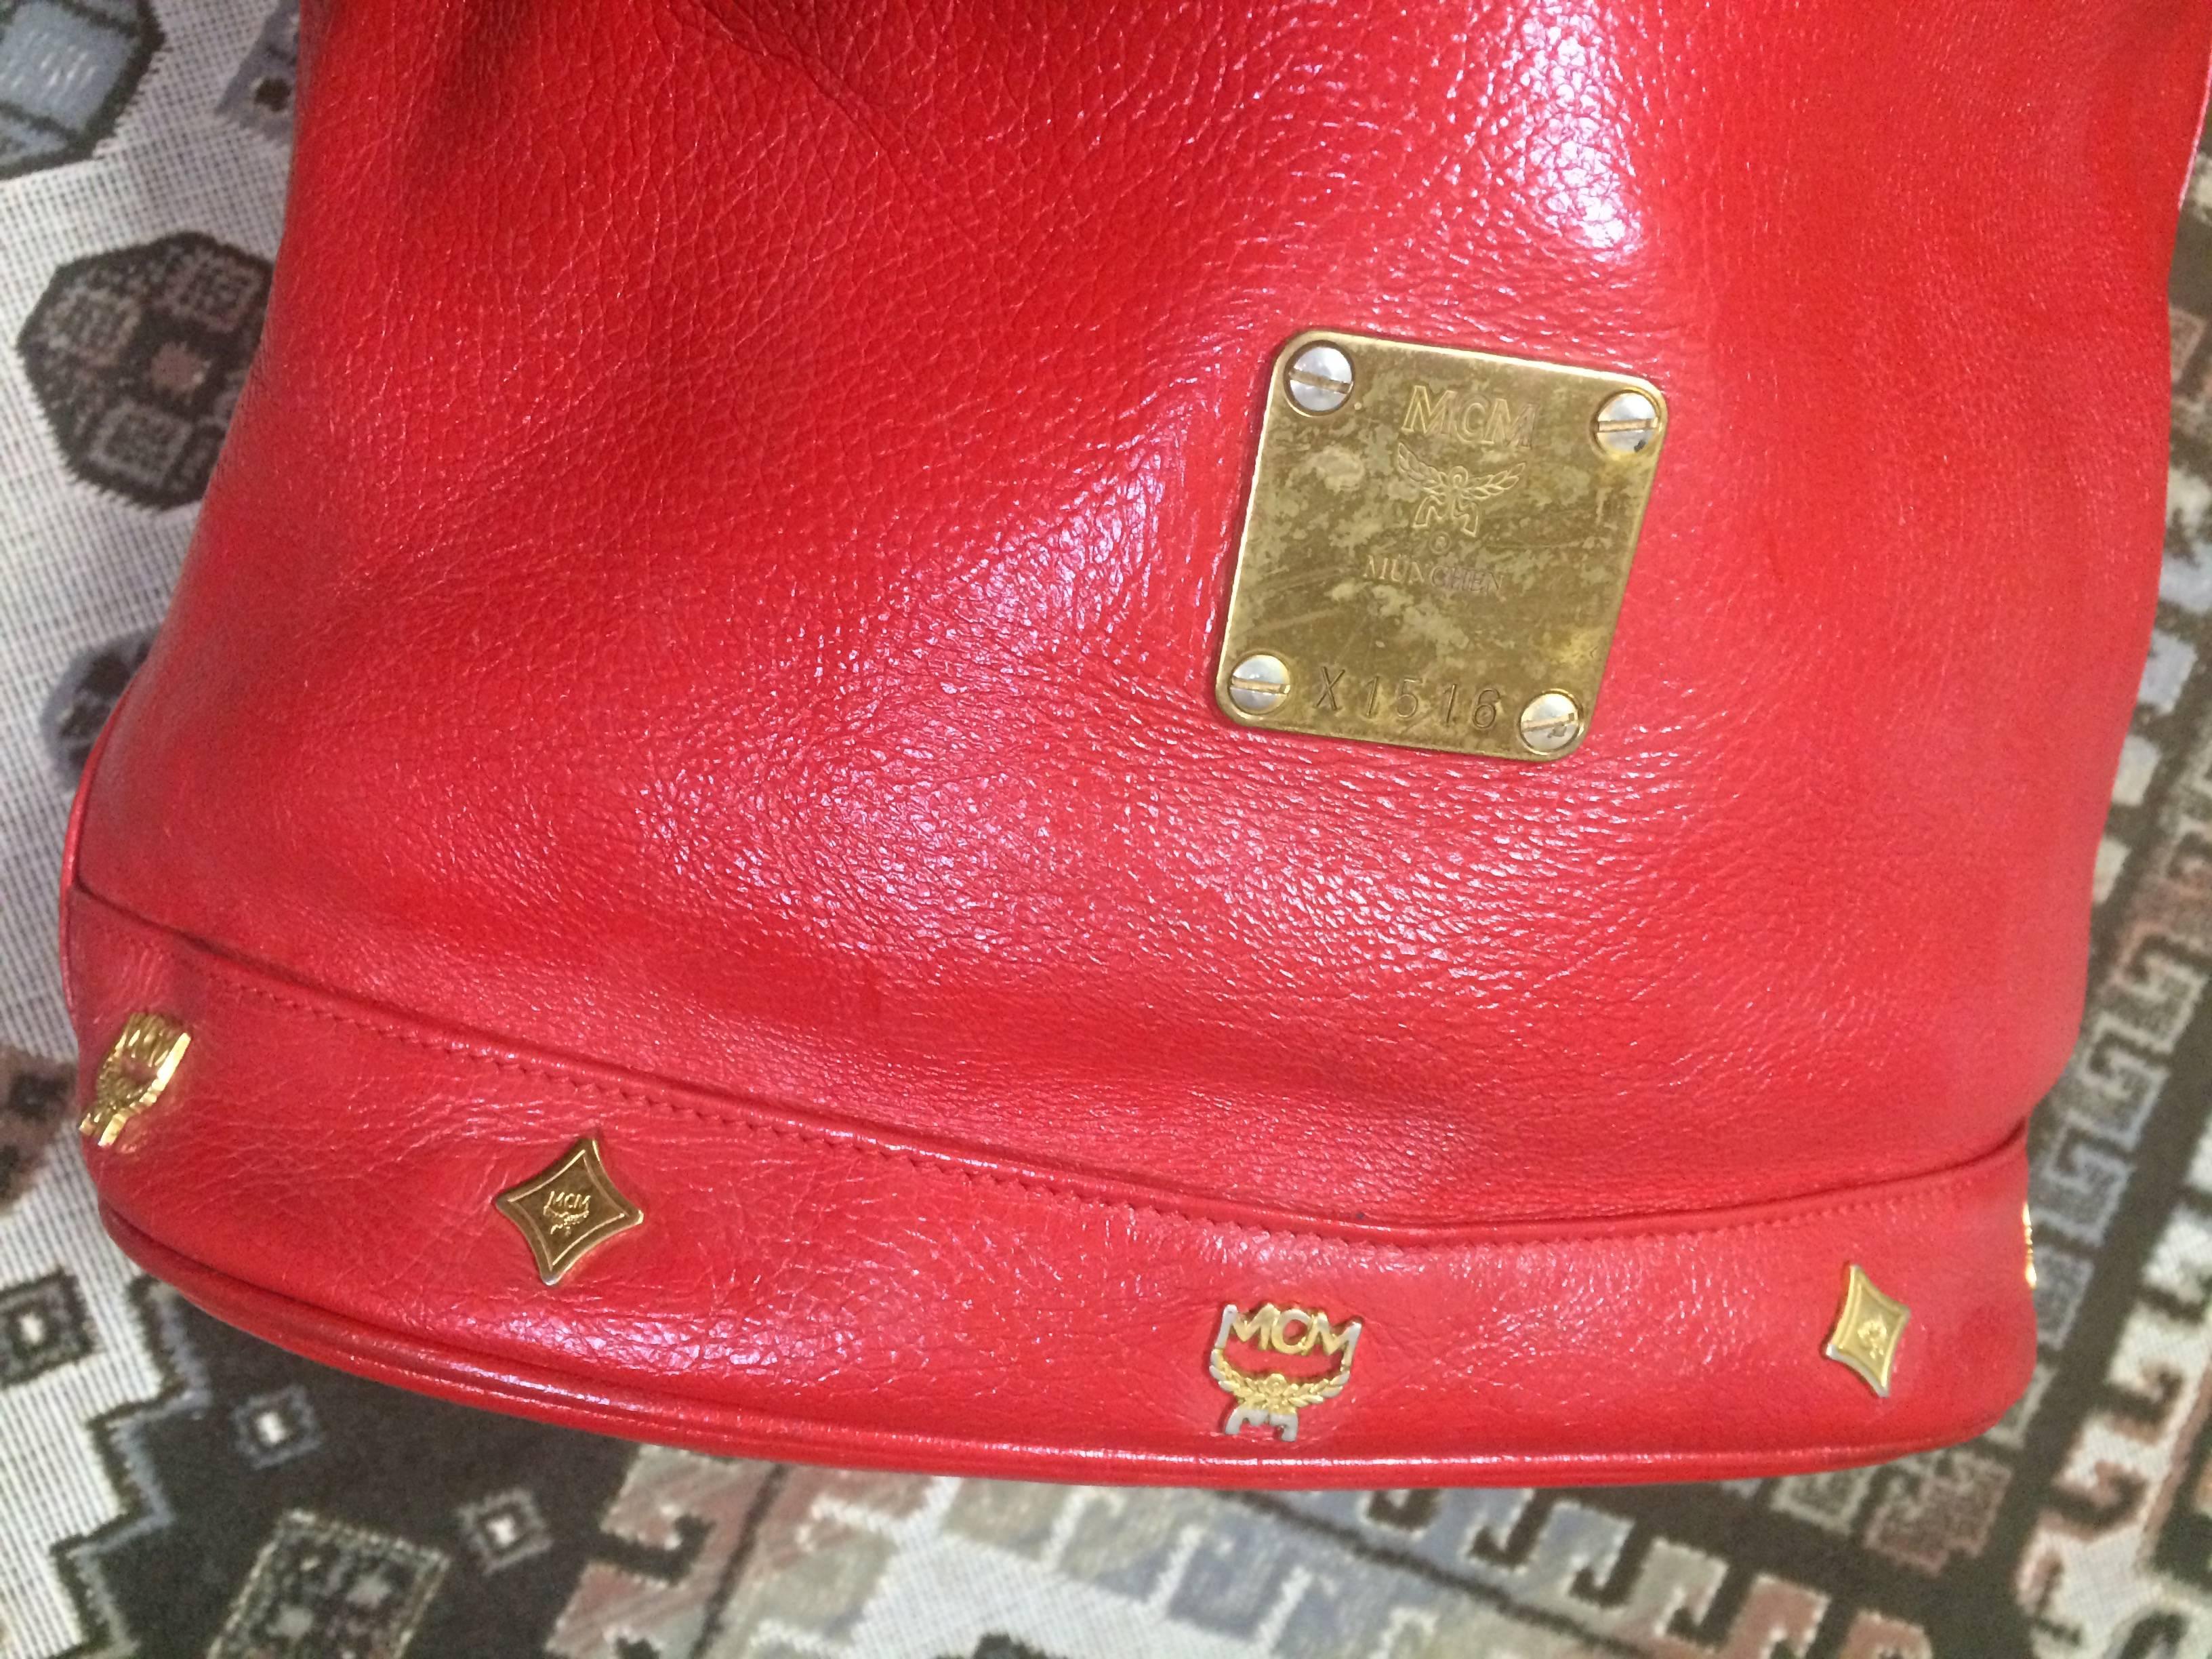 red mcm purse